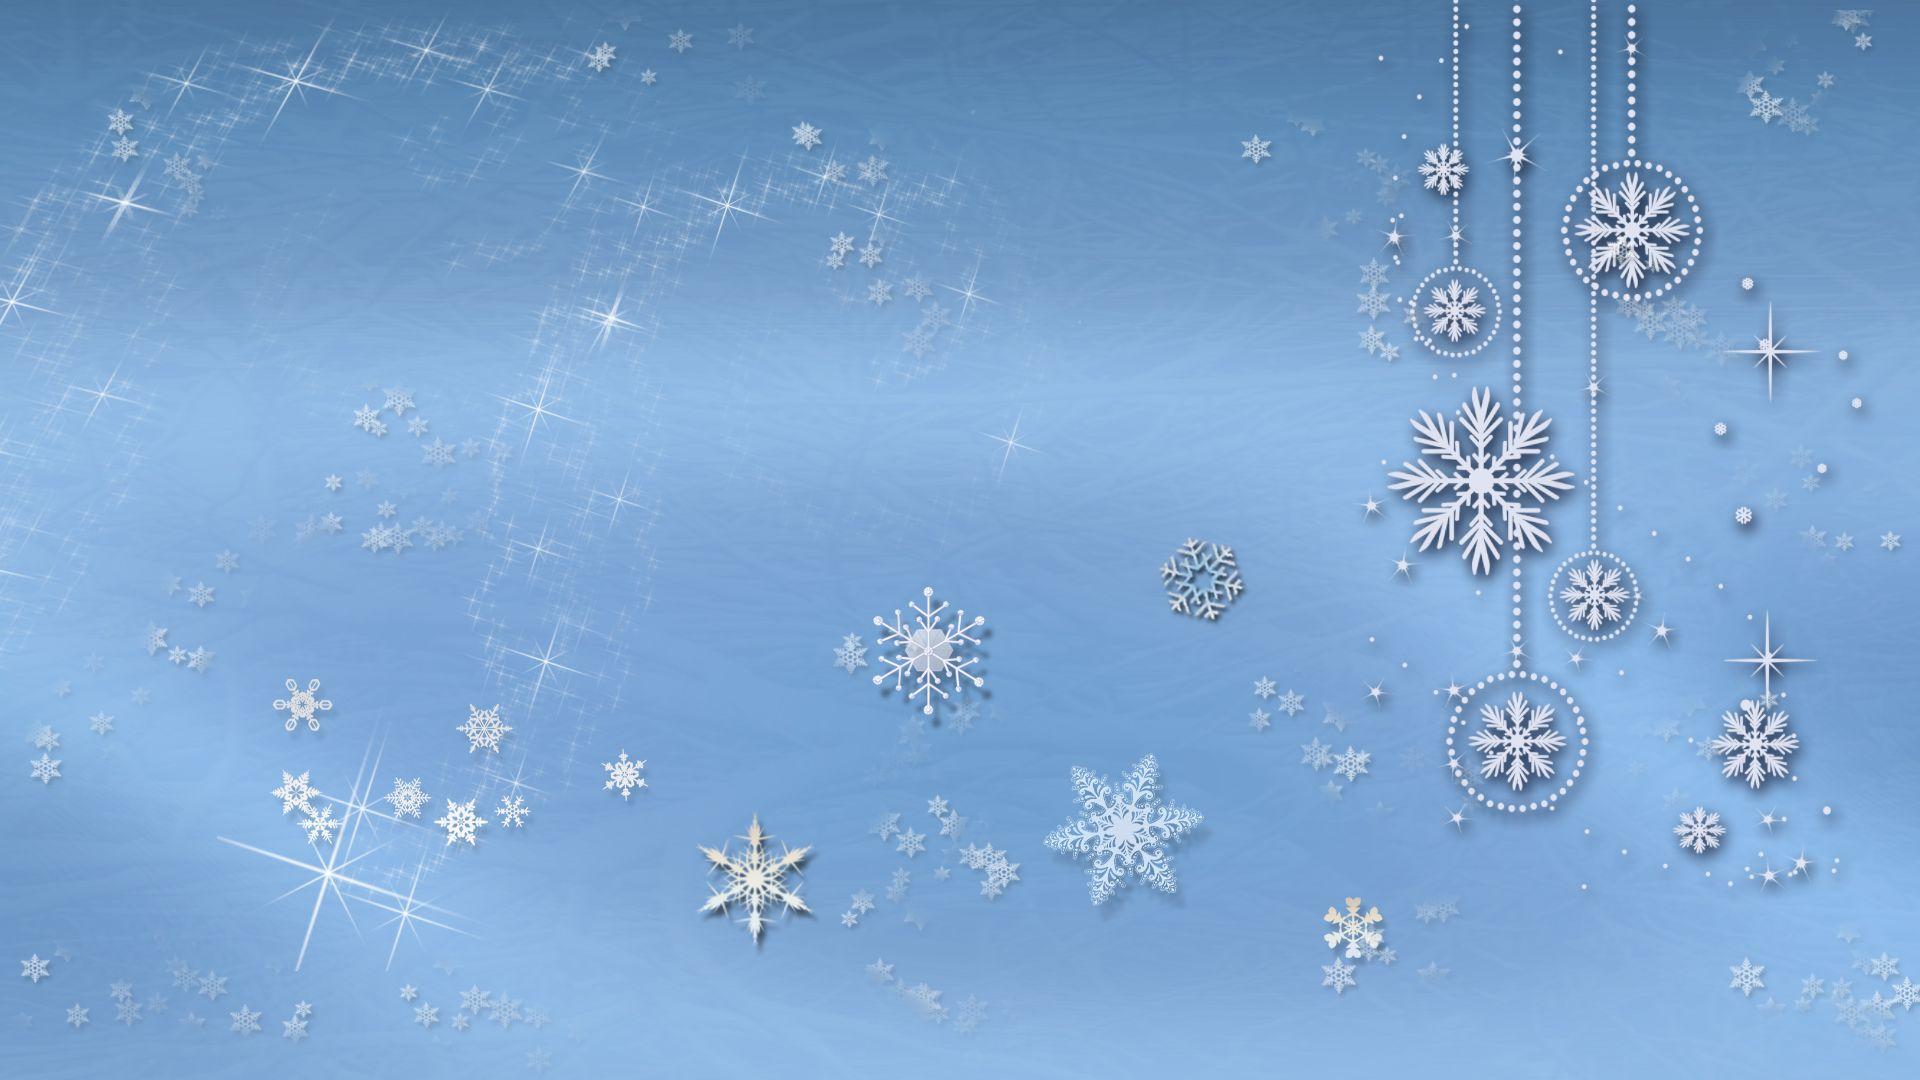 Christmas Snowflakes 2011 by Frankief